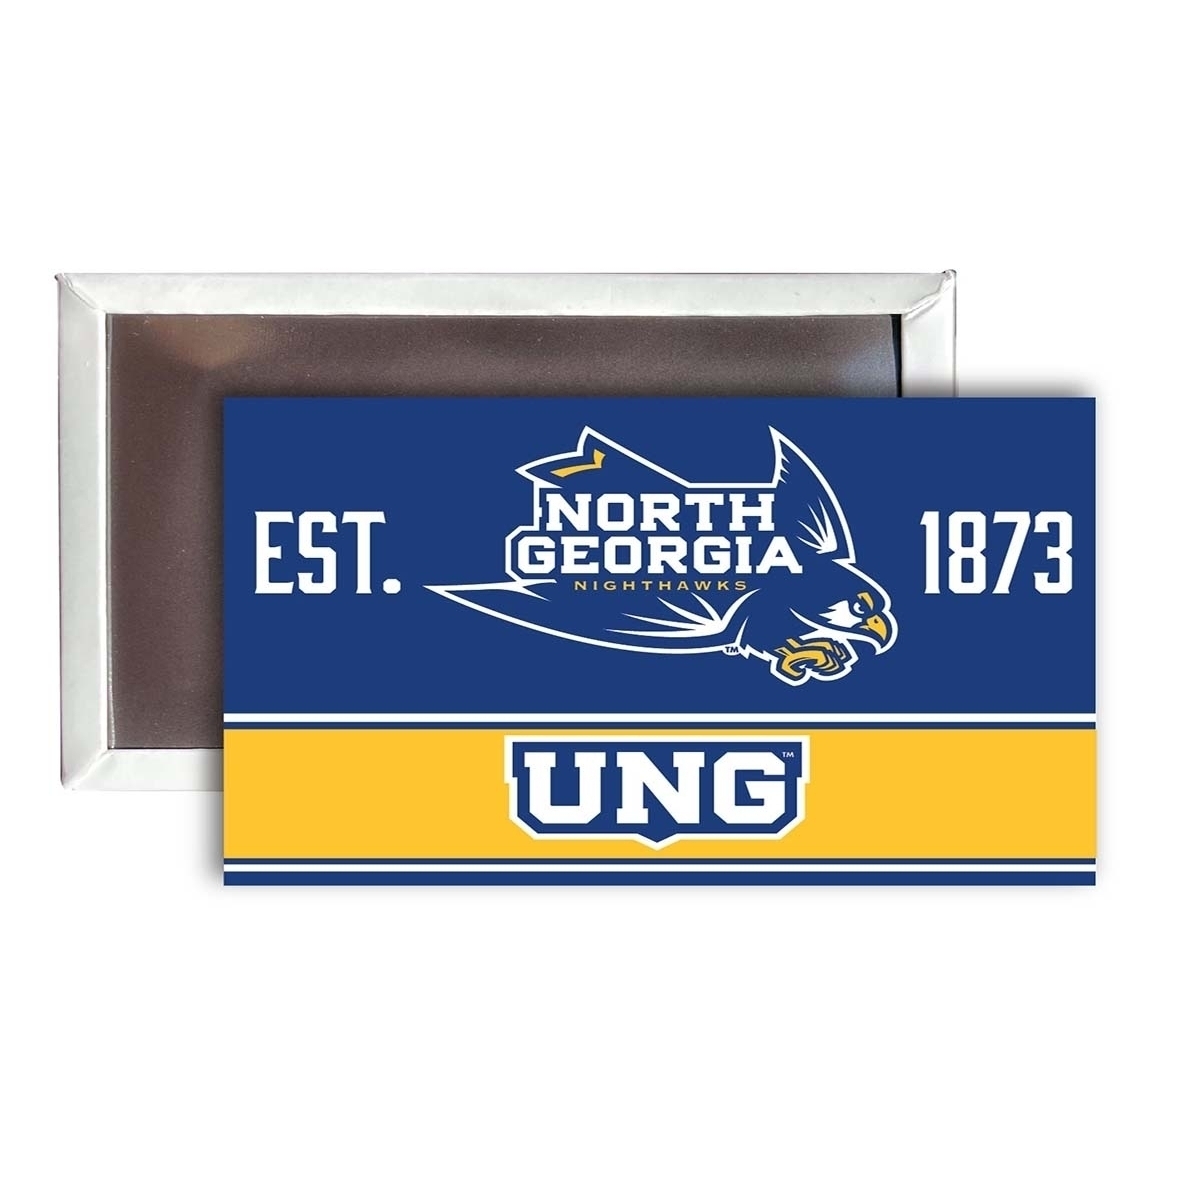 North Georgia Nighhawks 2x3-Inch Fridge Magnet